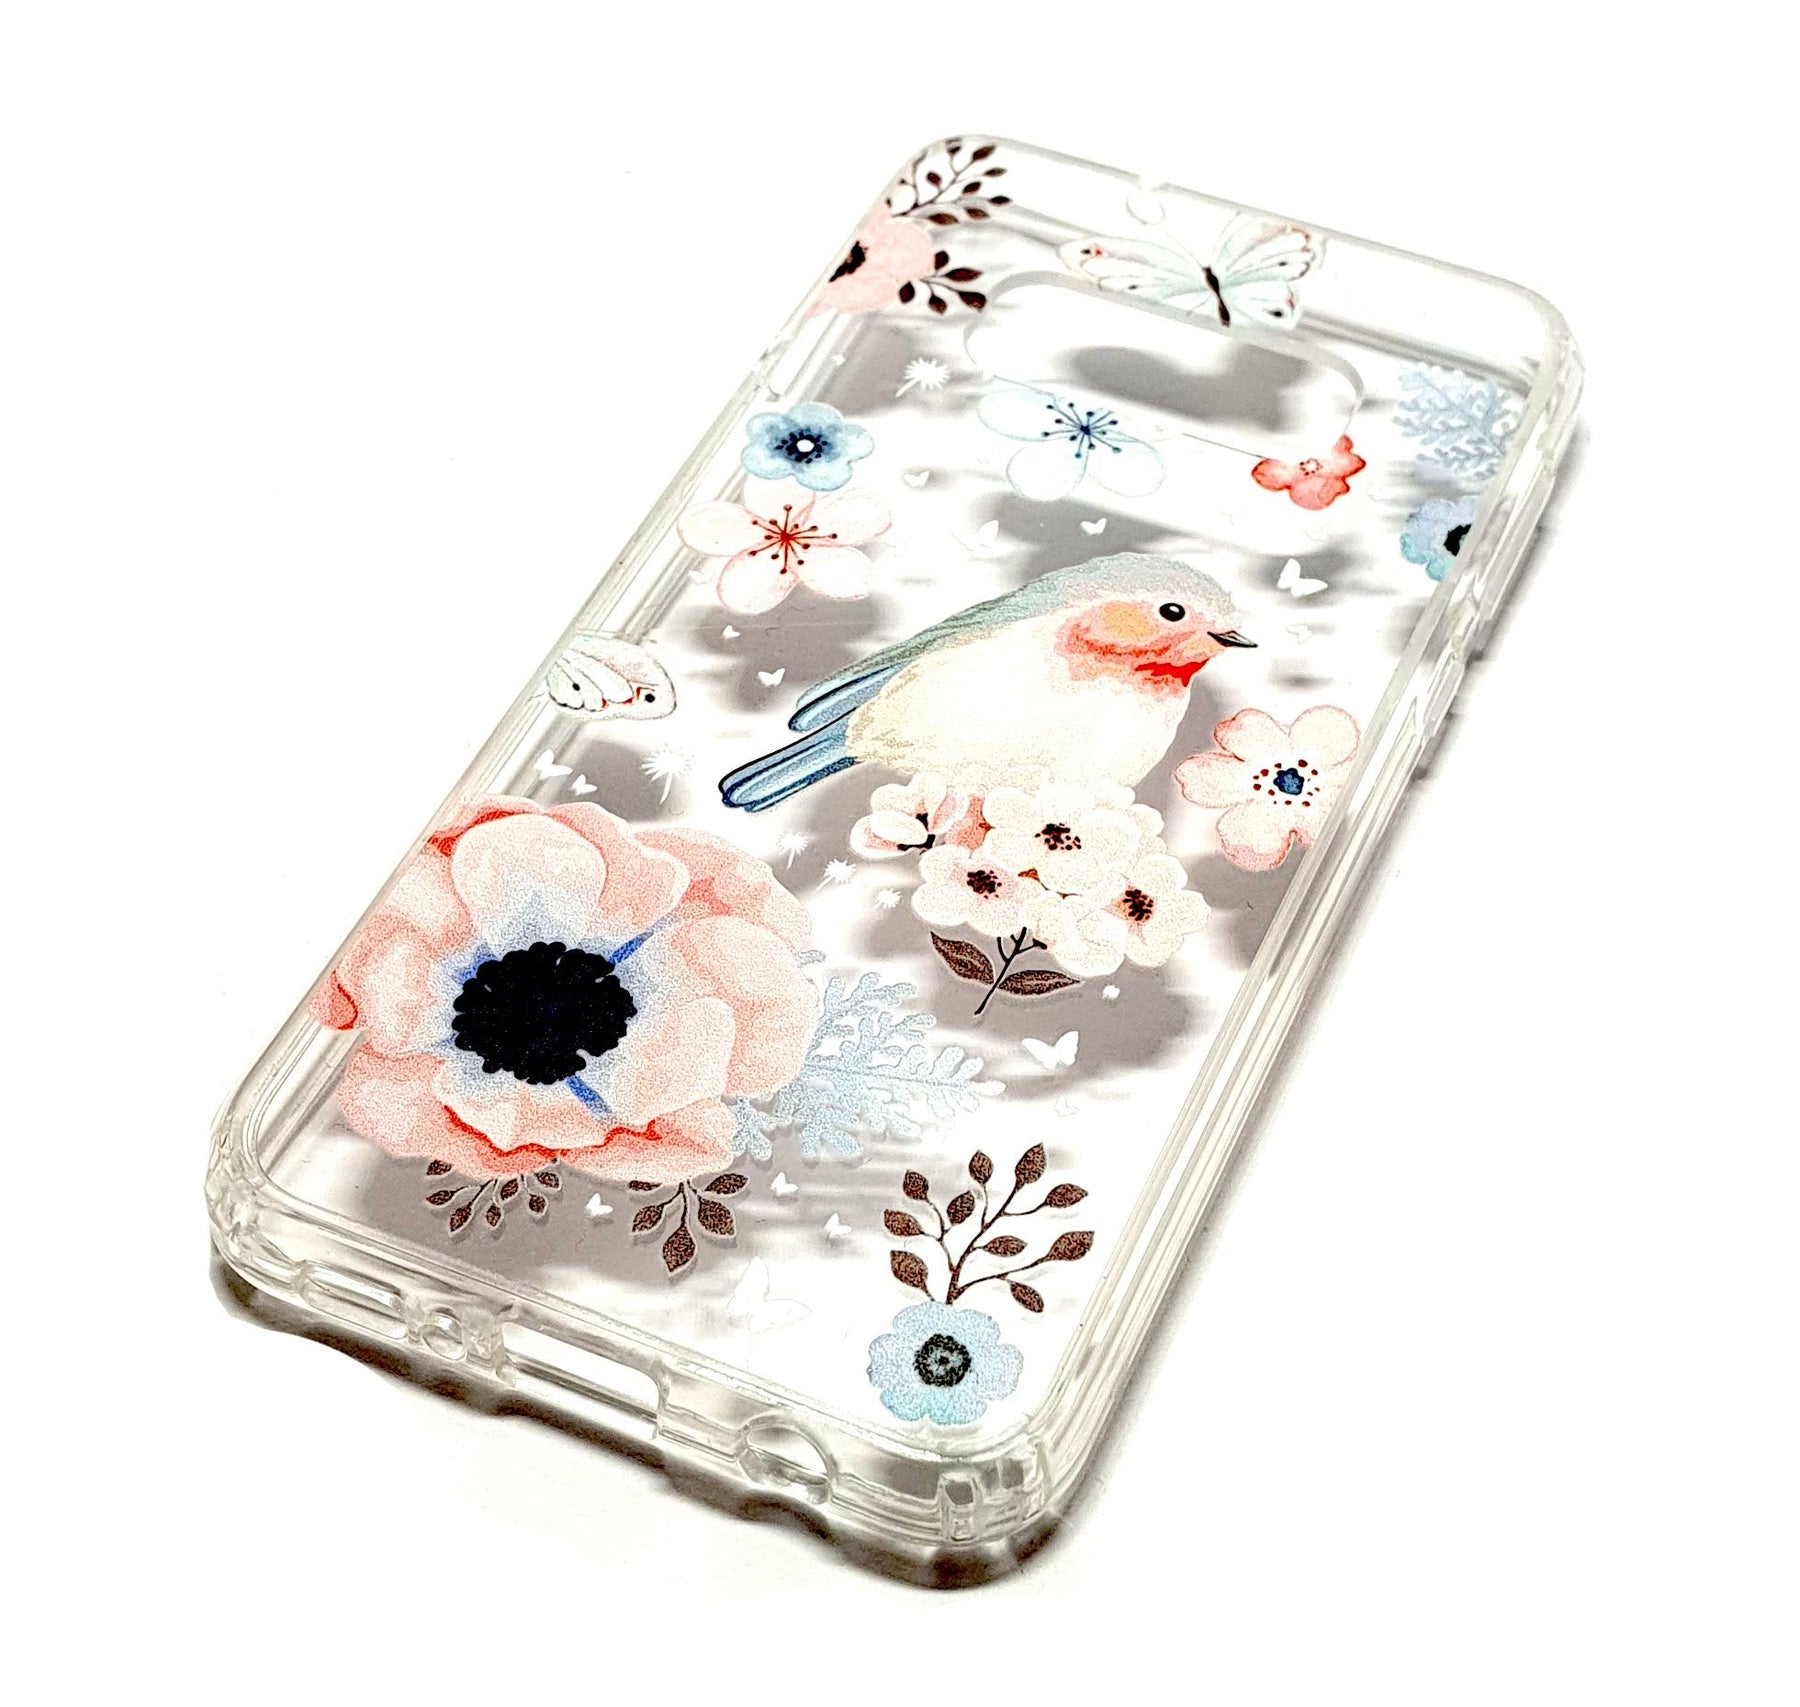 Samung S10 plus decorative clear transparent phone case robin